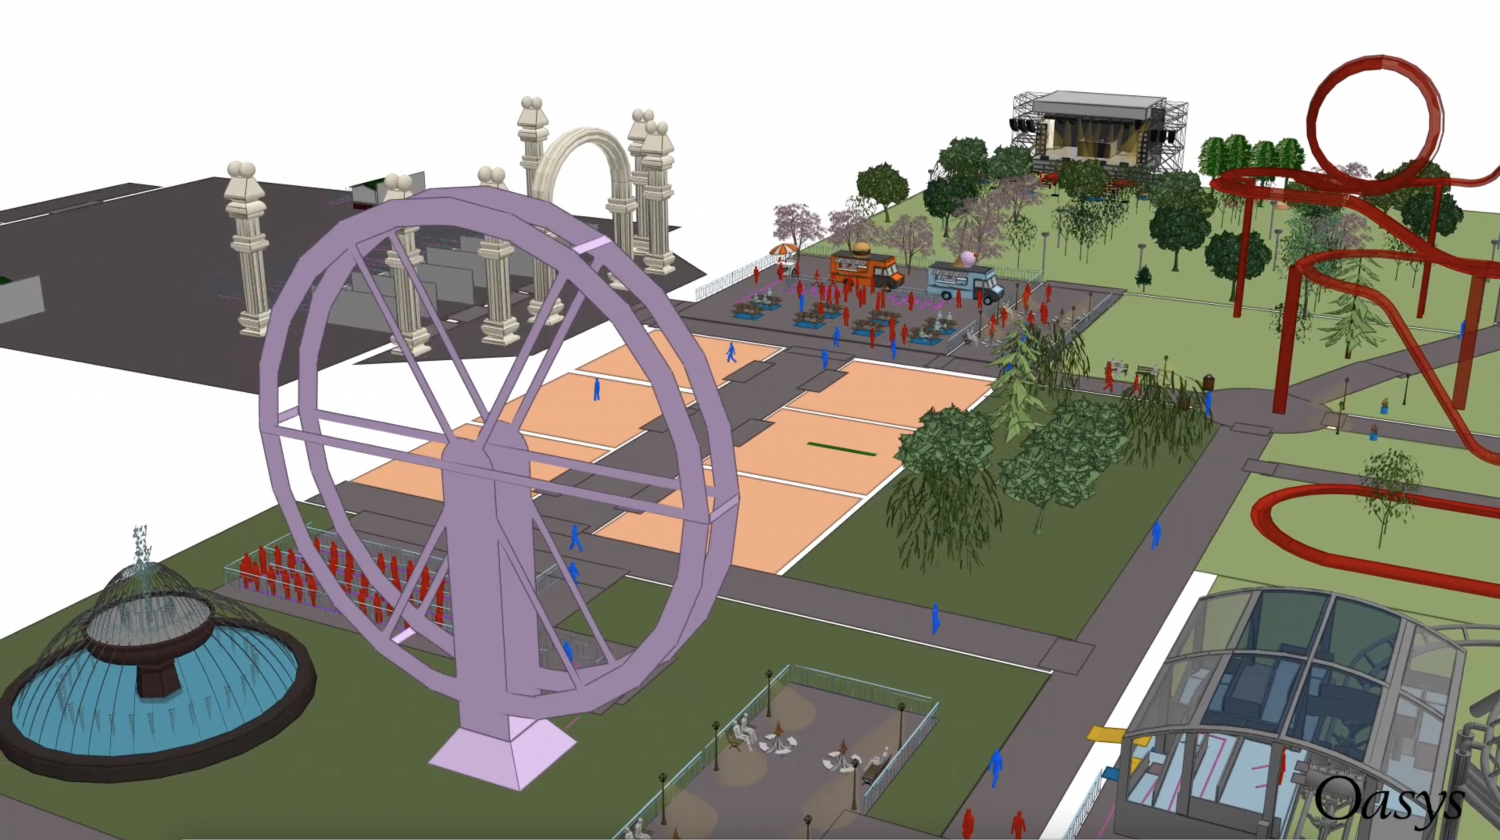 Theme Park - MassMotion crowd simulation software